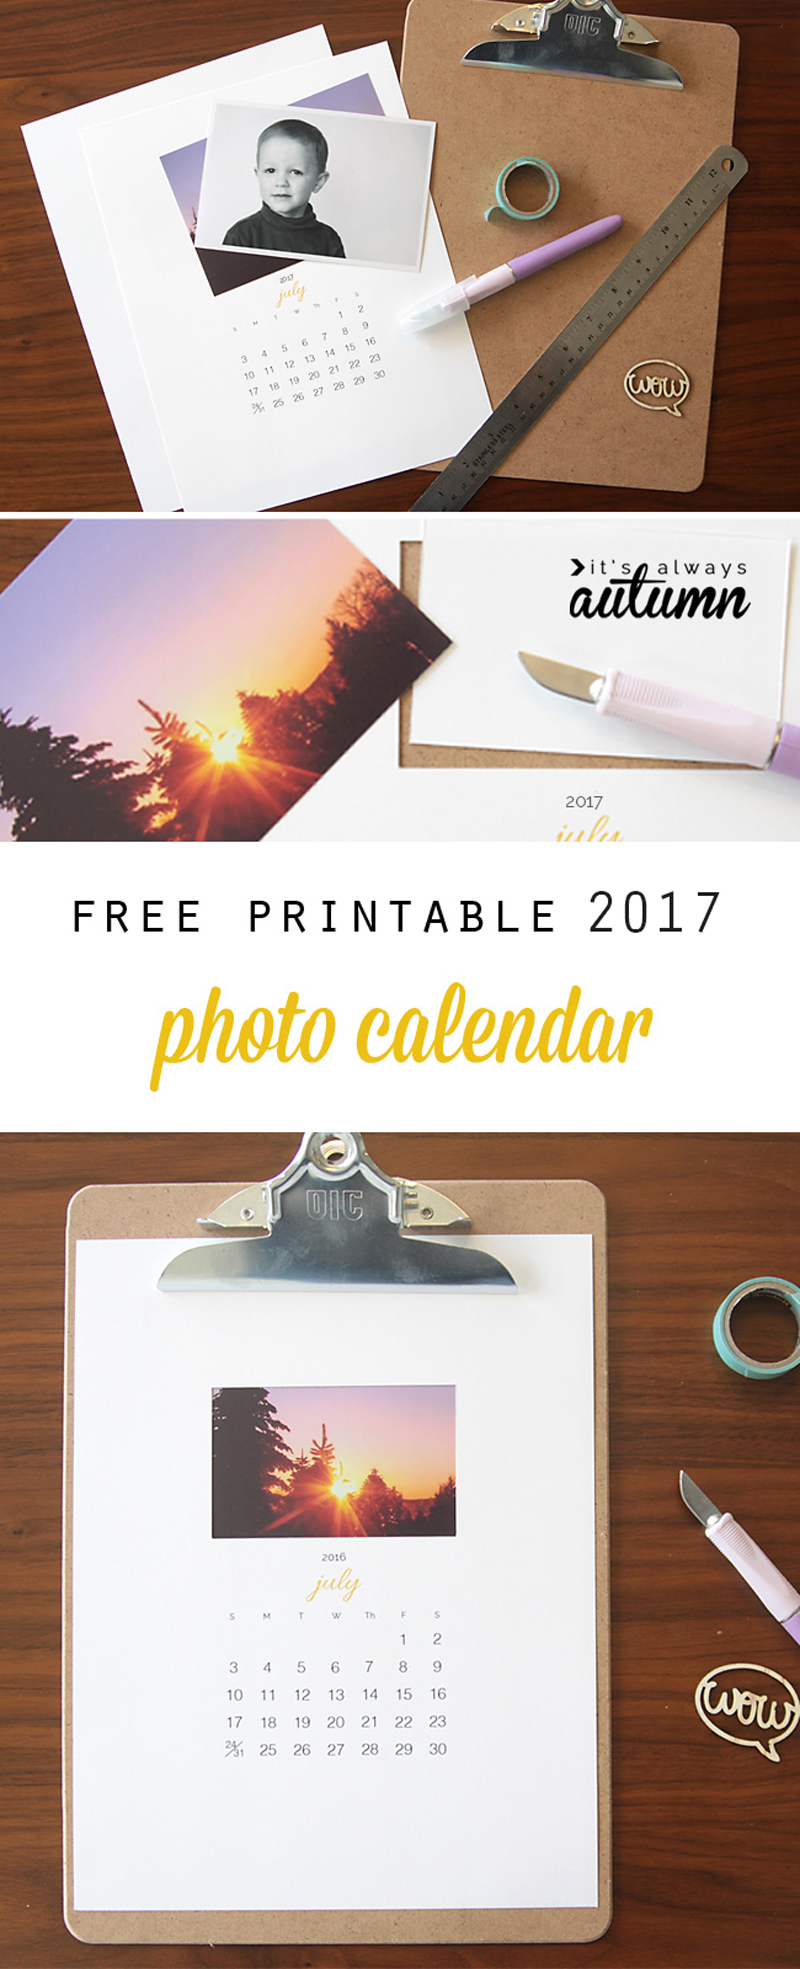 free printable 2017 photo calendar {easy DIY gift} - It's ...
